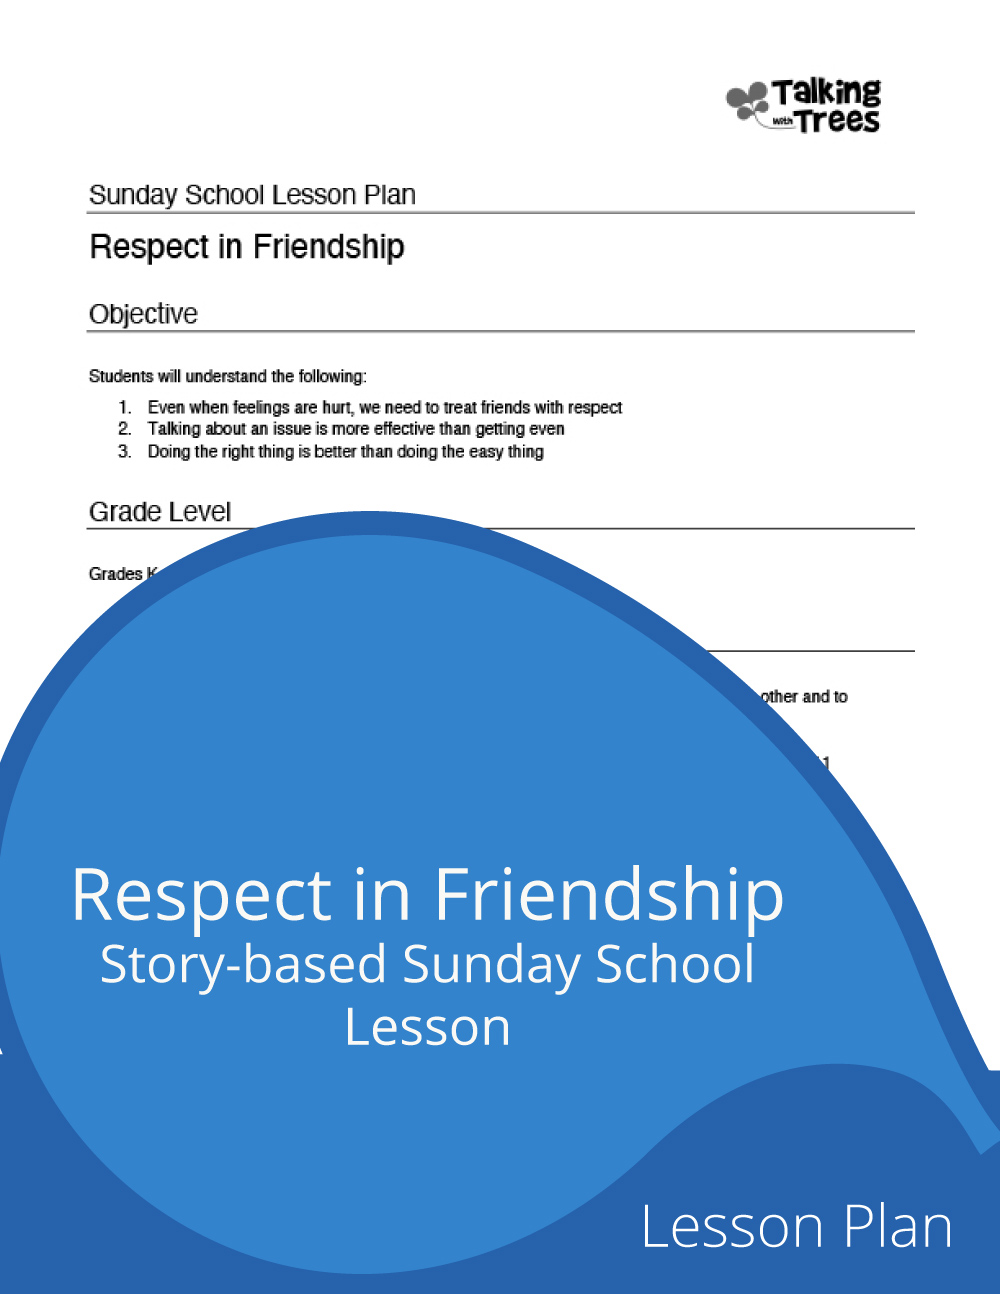 Respect in Friendship Sunday School Lesson